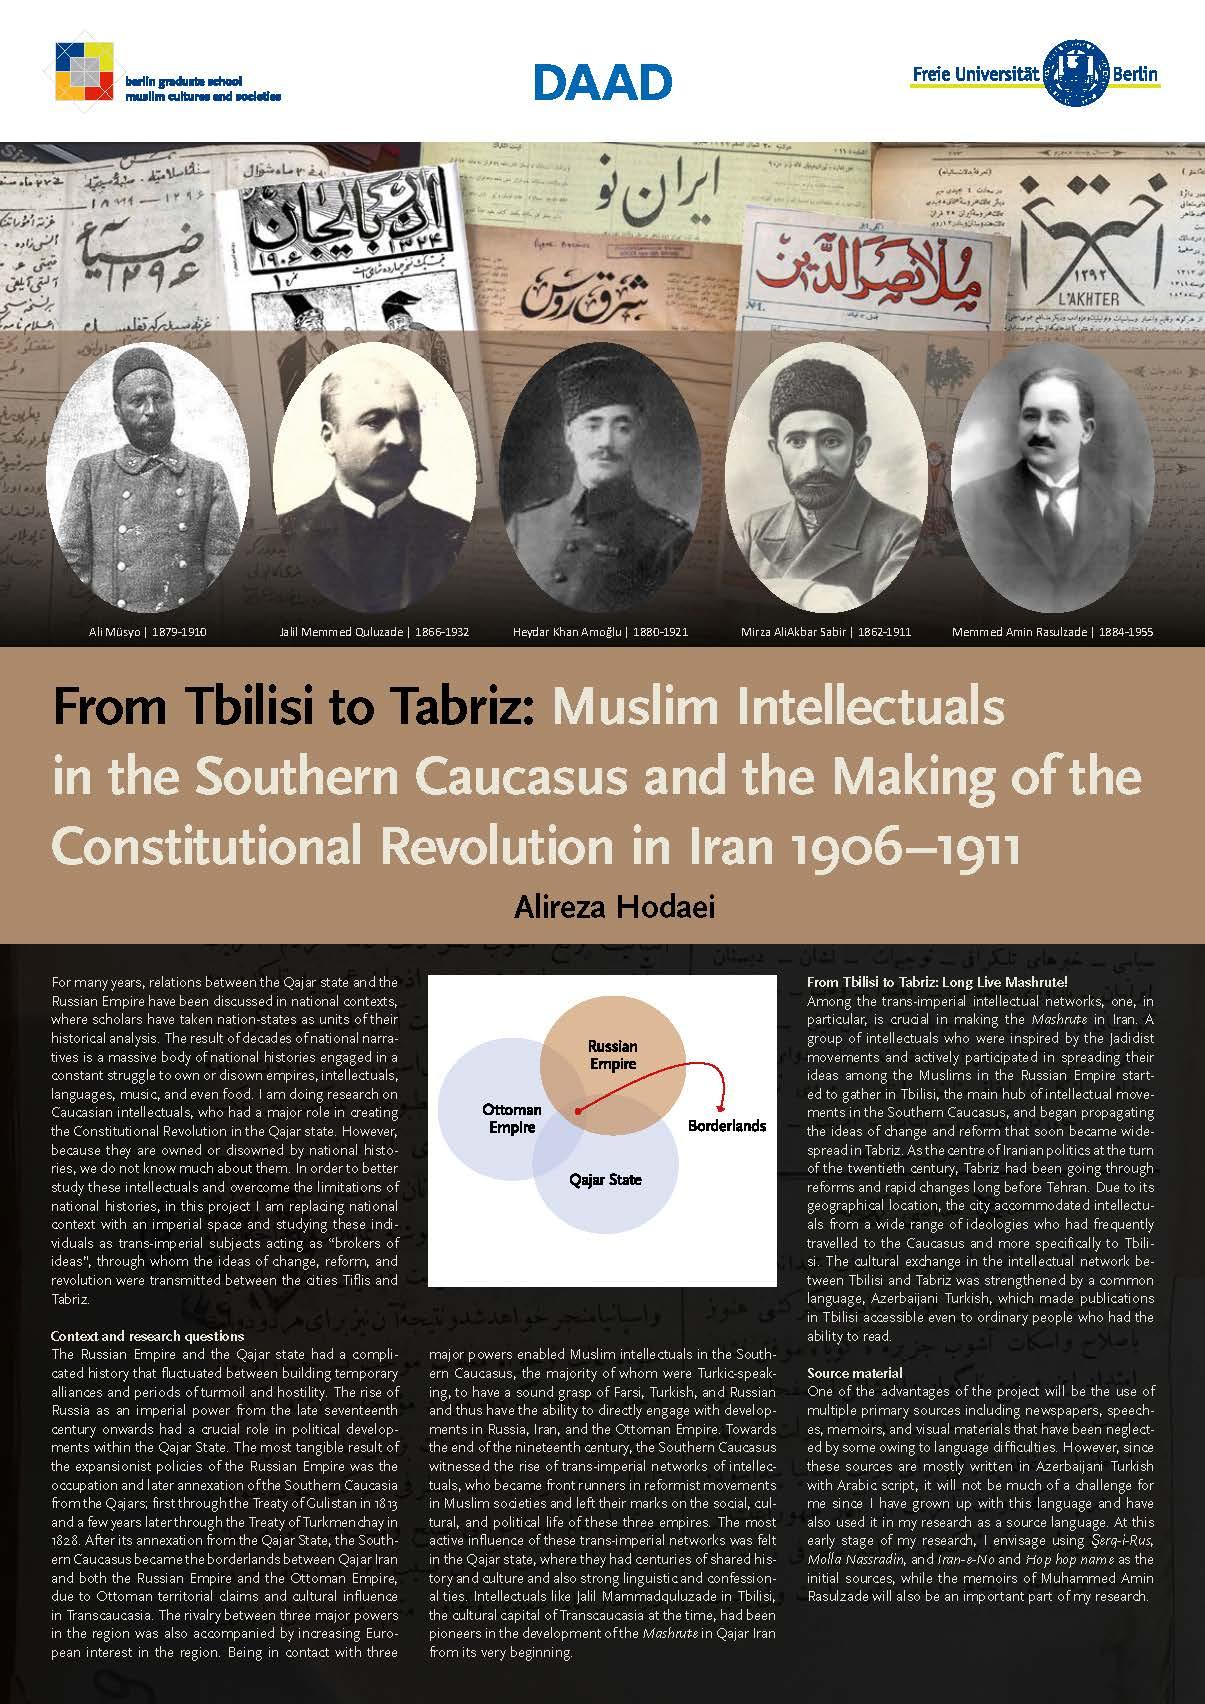 Alireza Hodaei: "From Tbilisi to Tabriz; Muslim Intellectuals in South Caucasus and Making the Constitutional Revolution in Iran 1906-1911"